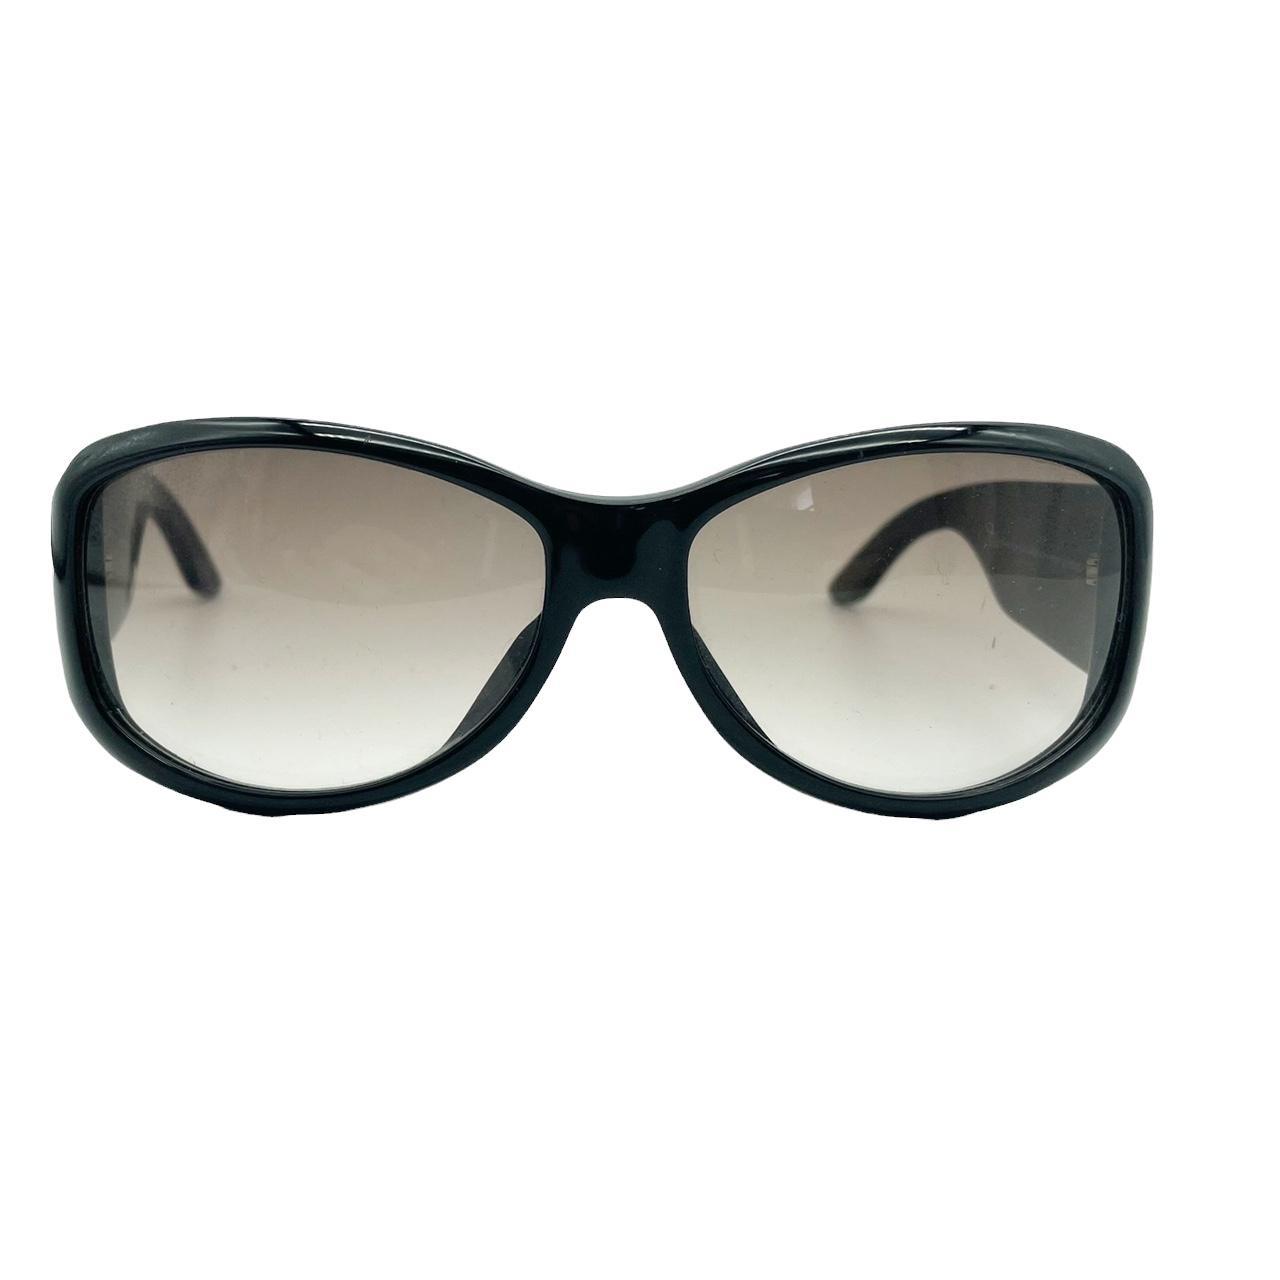 Dior sunglasses - Authentic Dior Chunky Sunglasses... - Depop